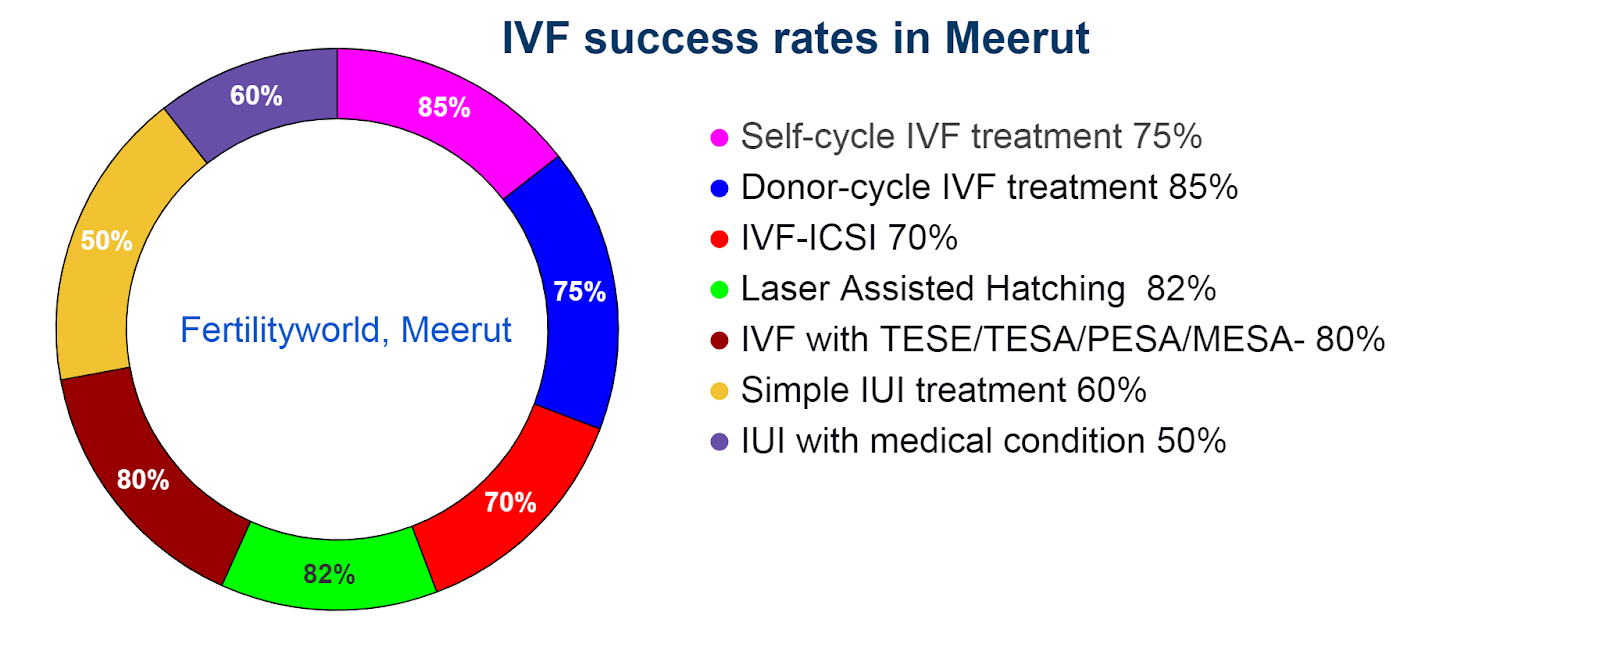  IVF success rate in Meerut